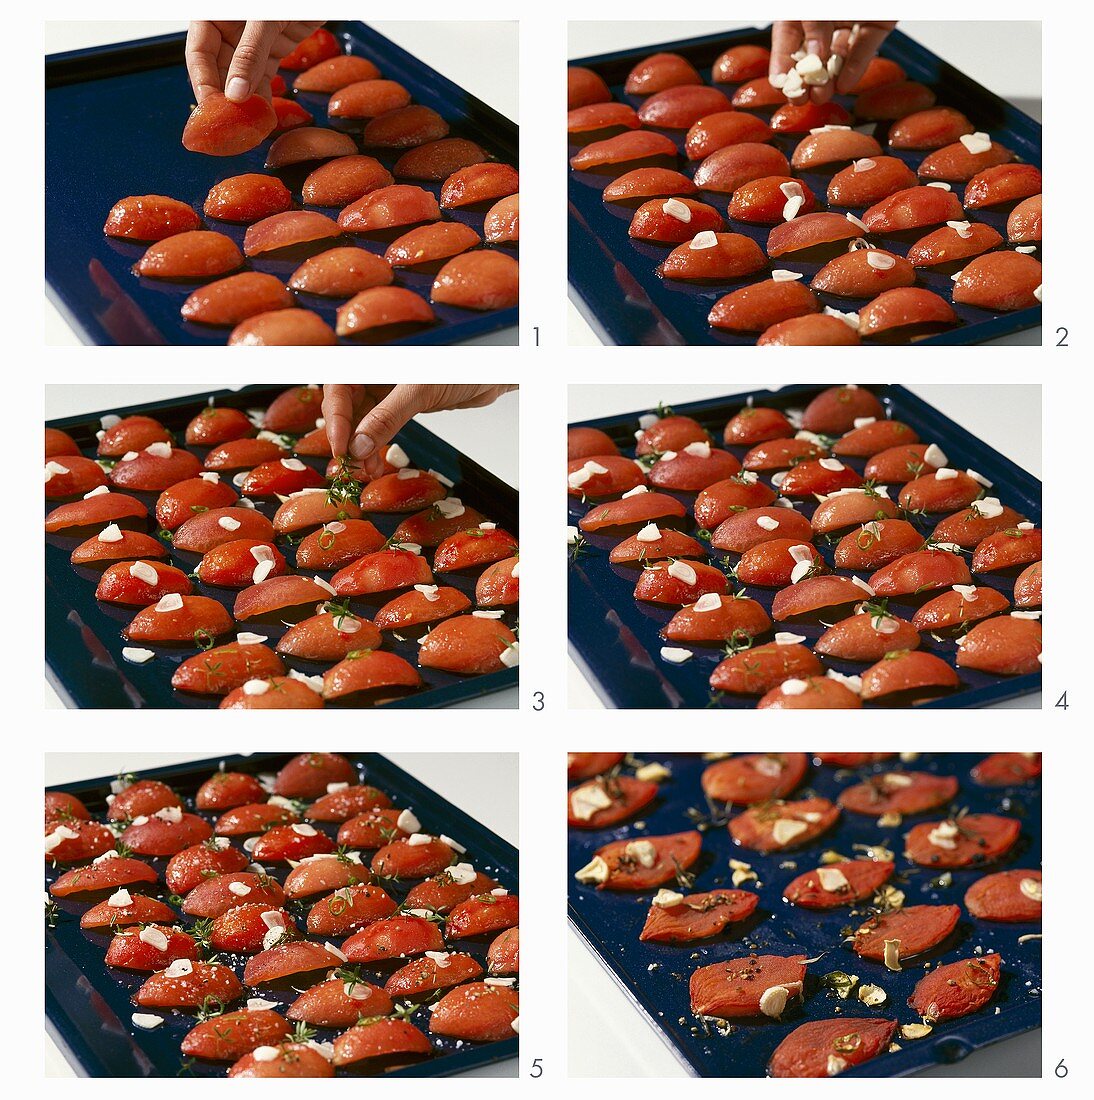 Making tomato confit